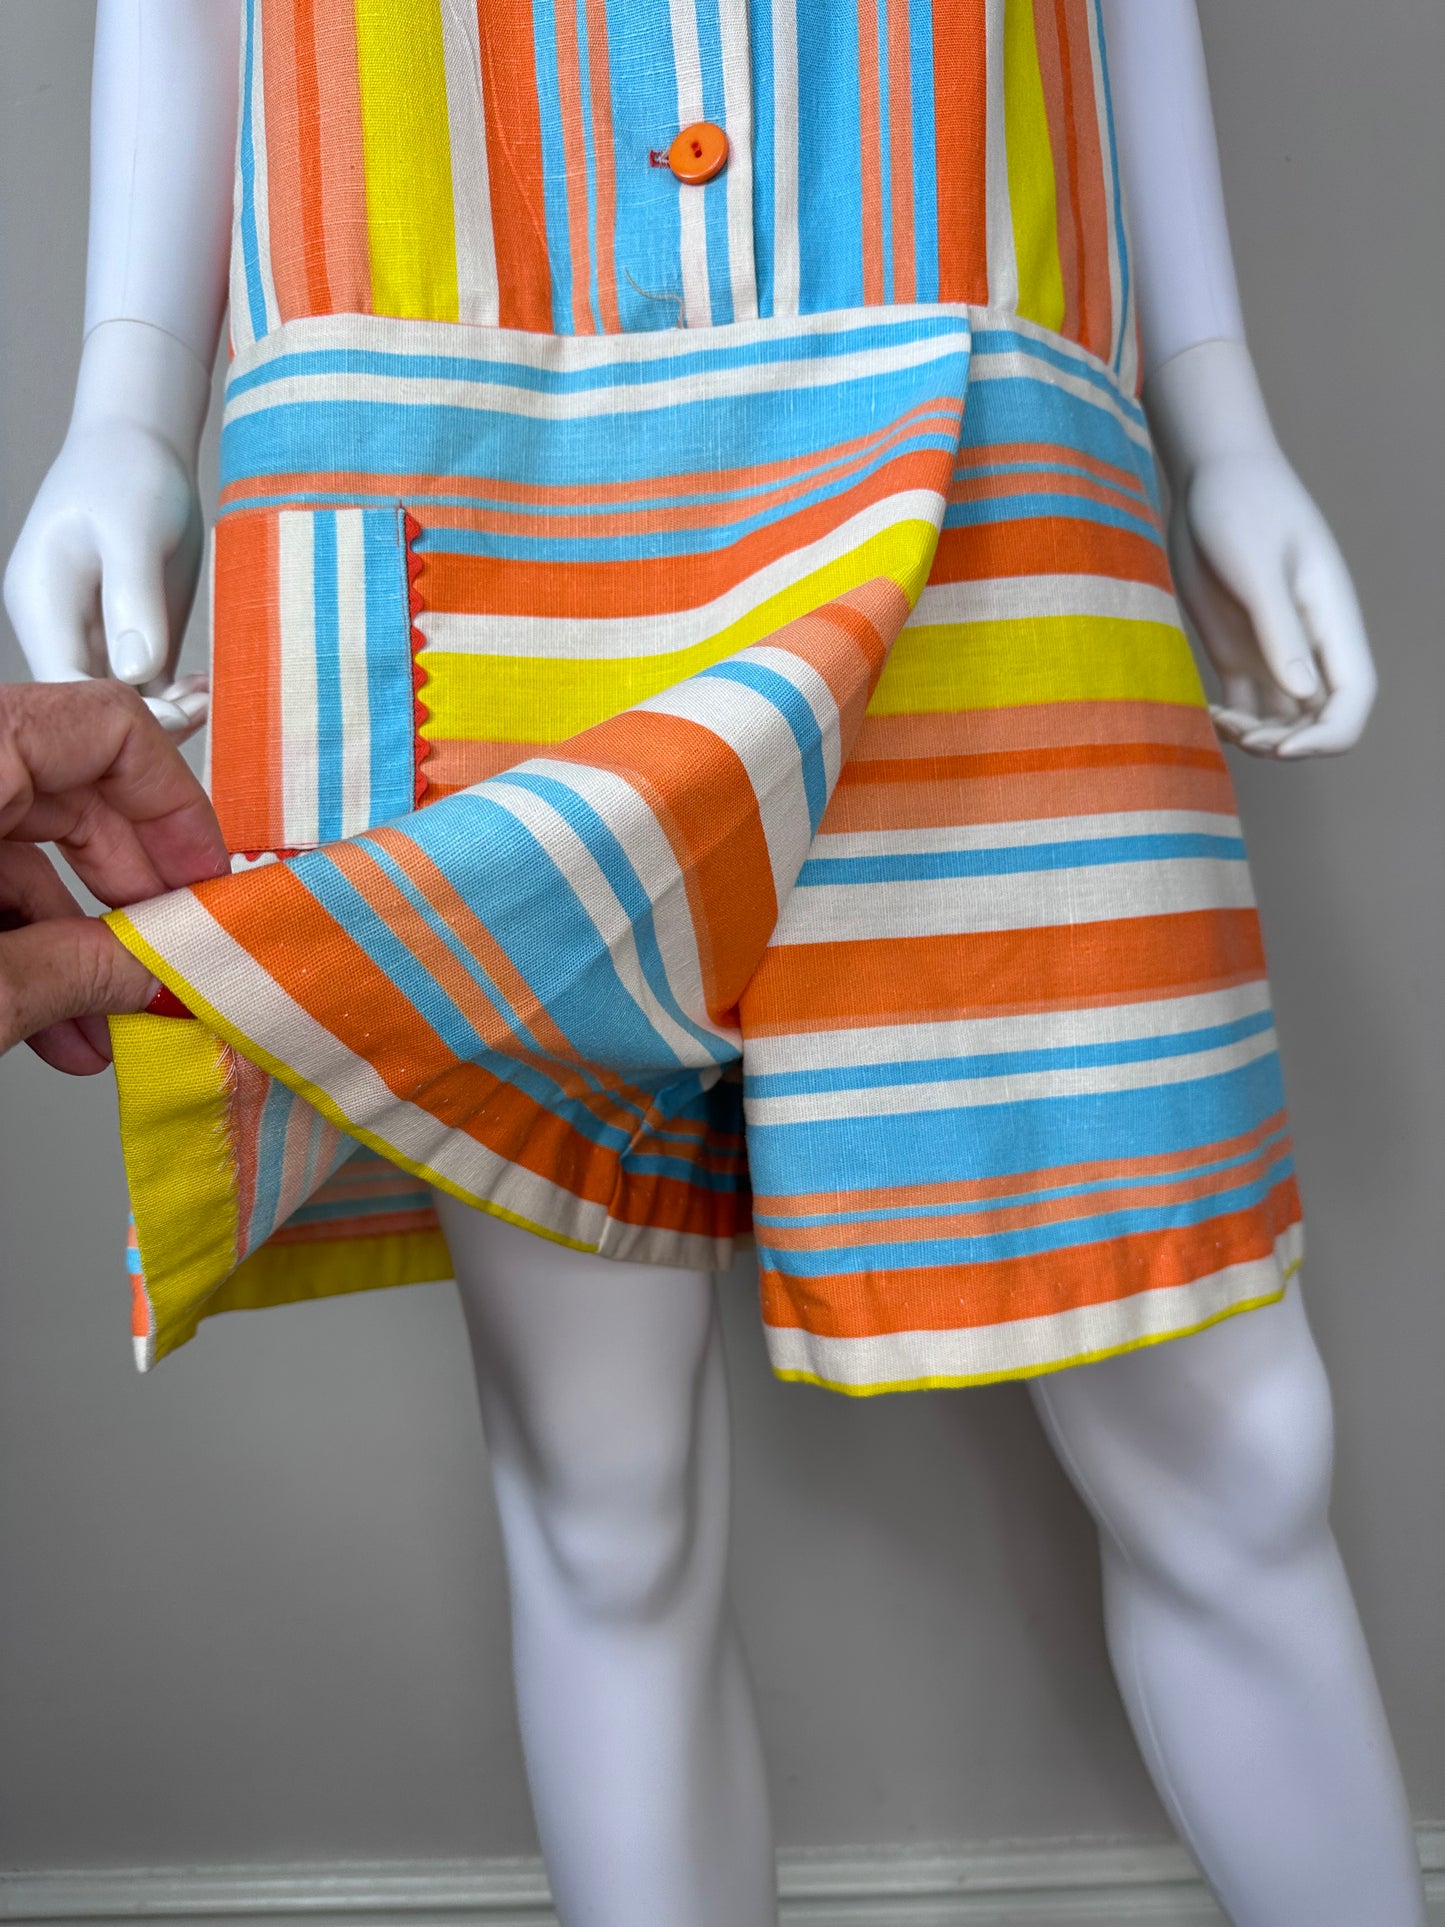 1960s Striped Romper Dress, Sears Size Large-XL